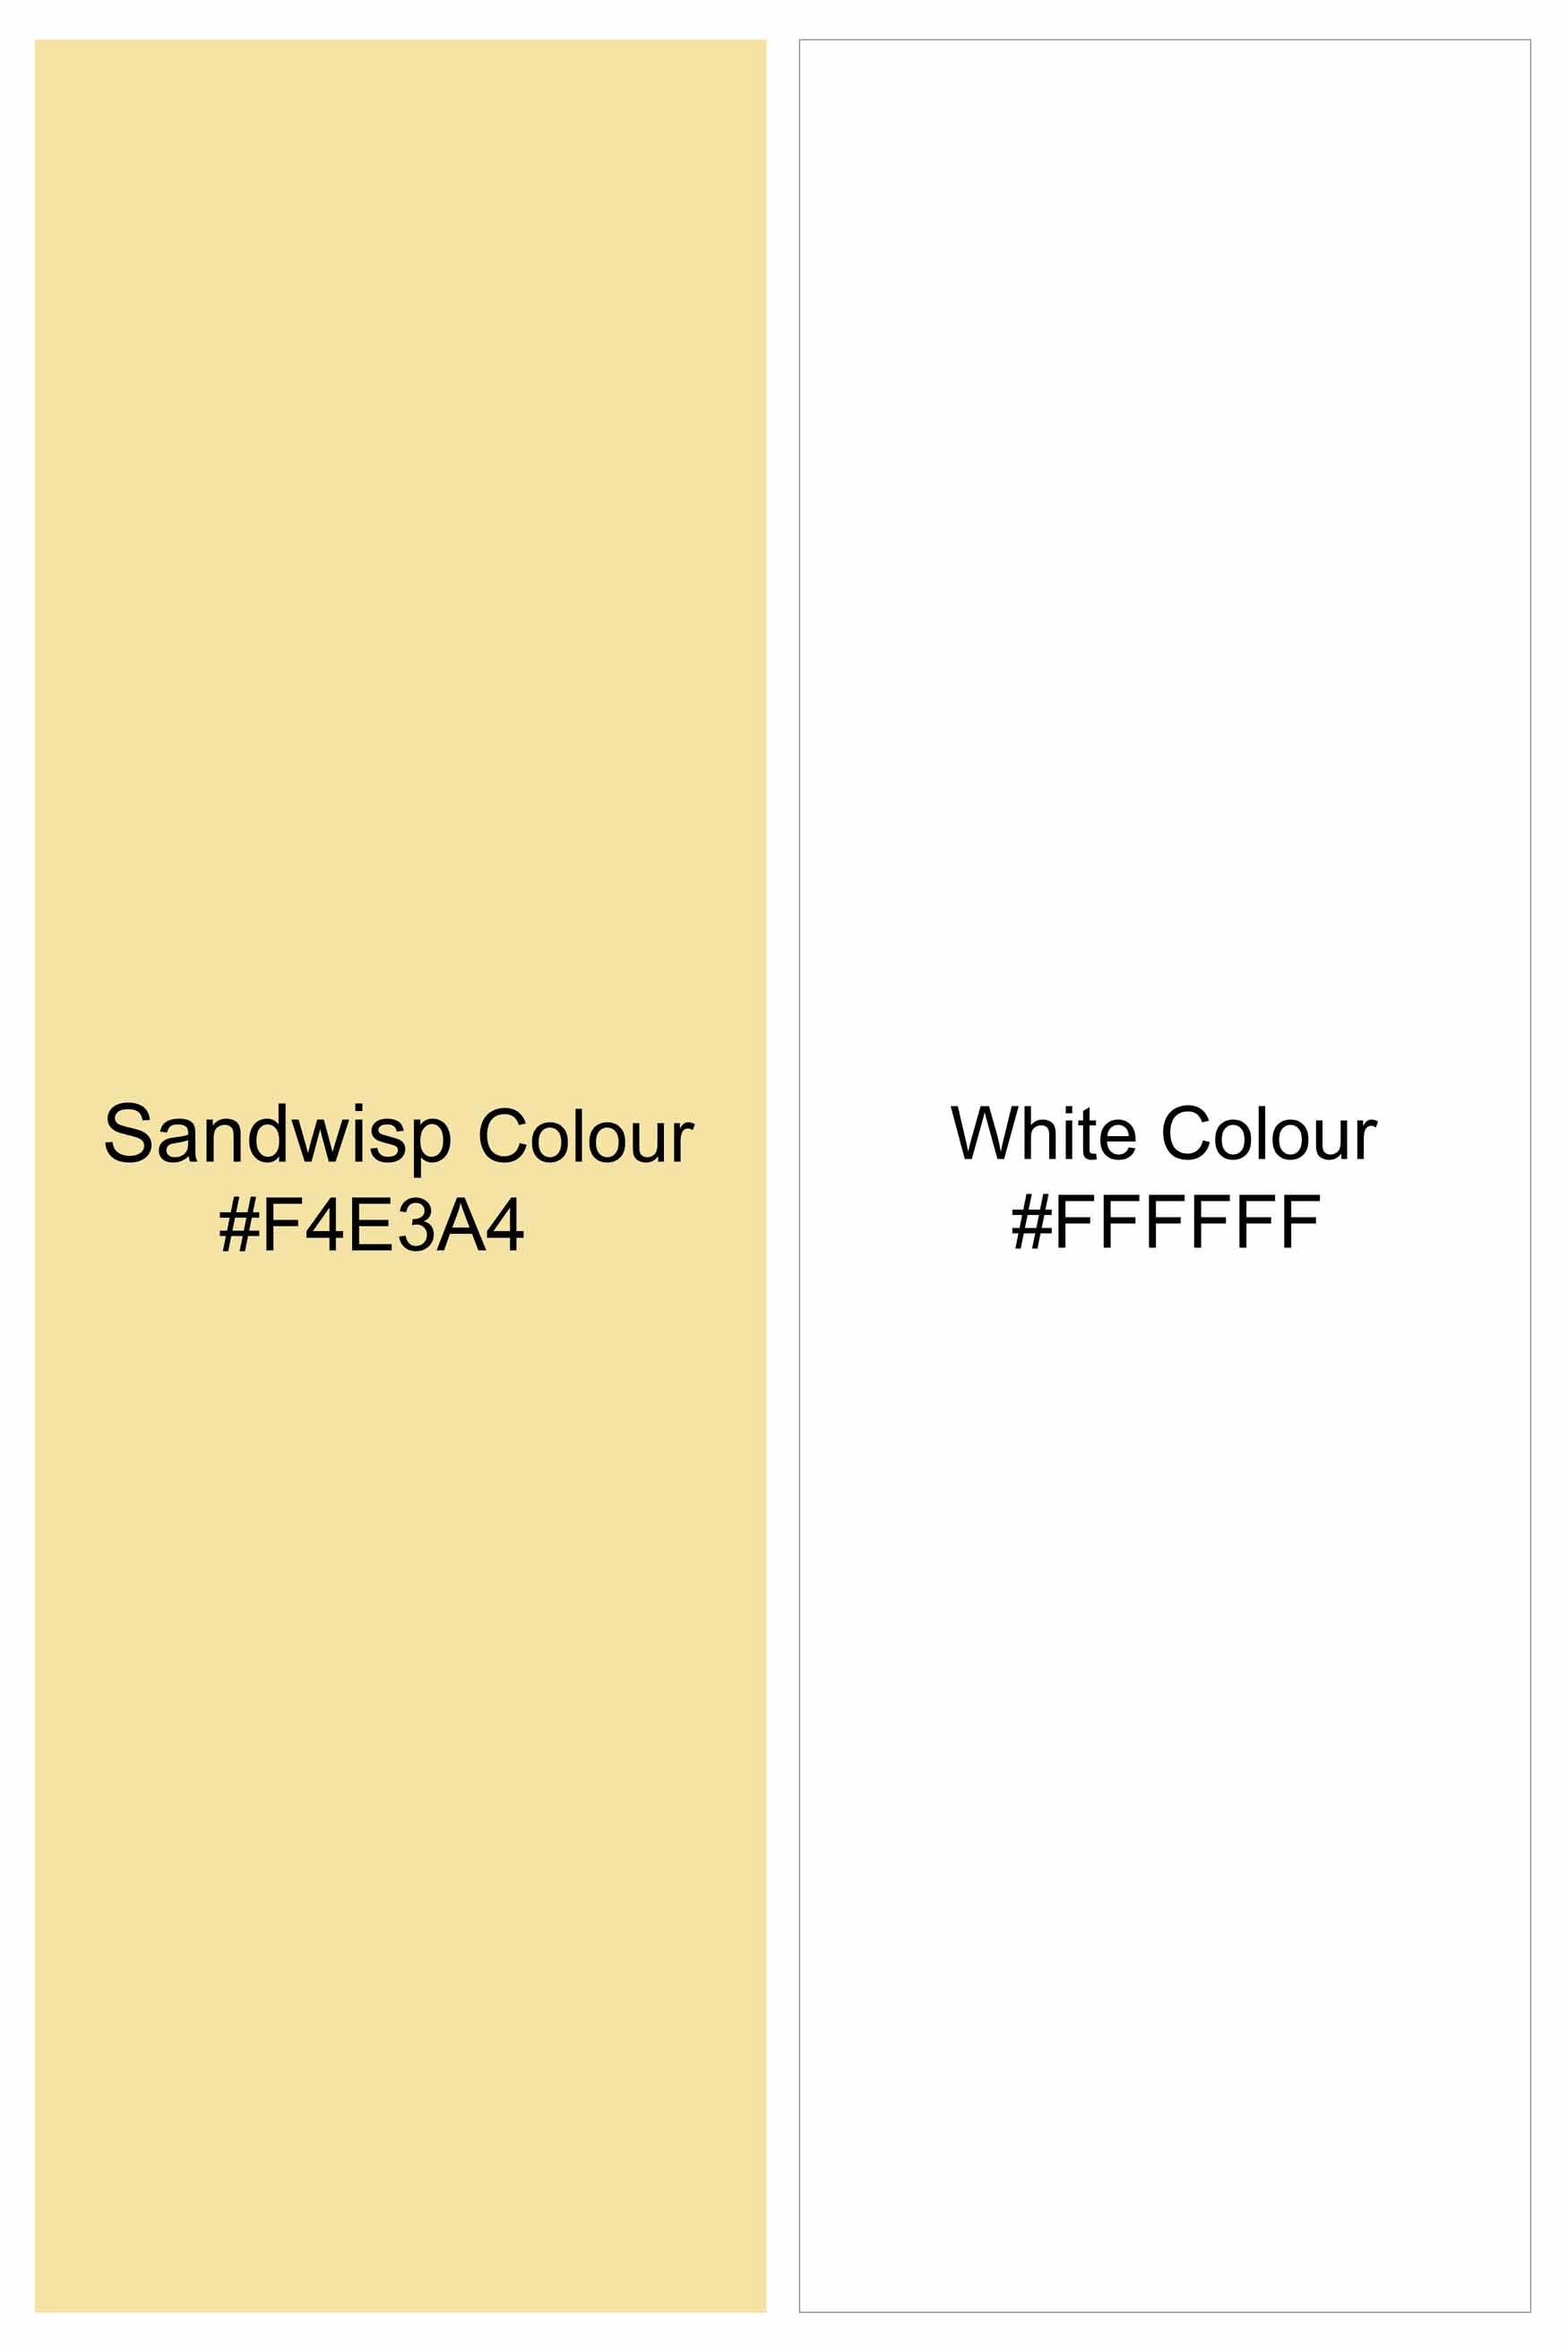 Sandwisp Yellow and White Printed Subtle Sheen Super Soft Premium Cotton Shirt 11455-38, 11455-H-38, 11455-39, 11455-H-39, 11455-40, 11455-H-40, 11455-42, 11455-H-42, 11455-44, 11455-H-44, 11455-46, 11455-H-46, 11455-48, 11455-H-48, 11455-50, 11455-H-50, 11455-52, 11455-H-52